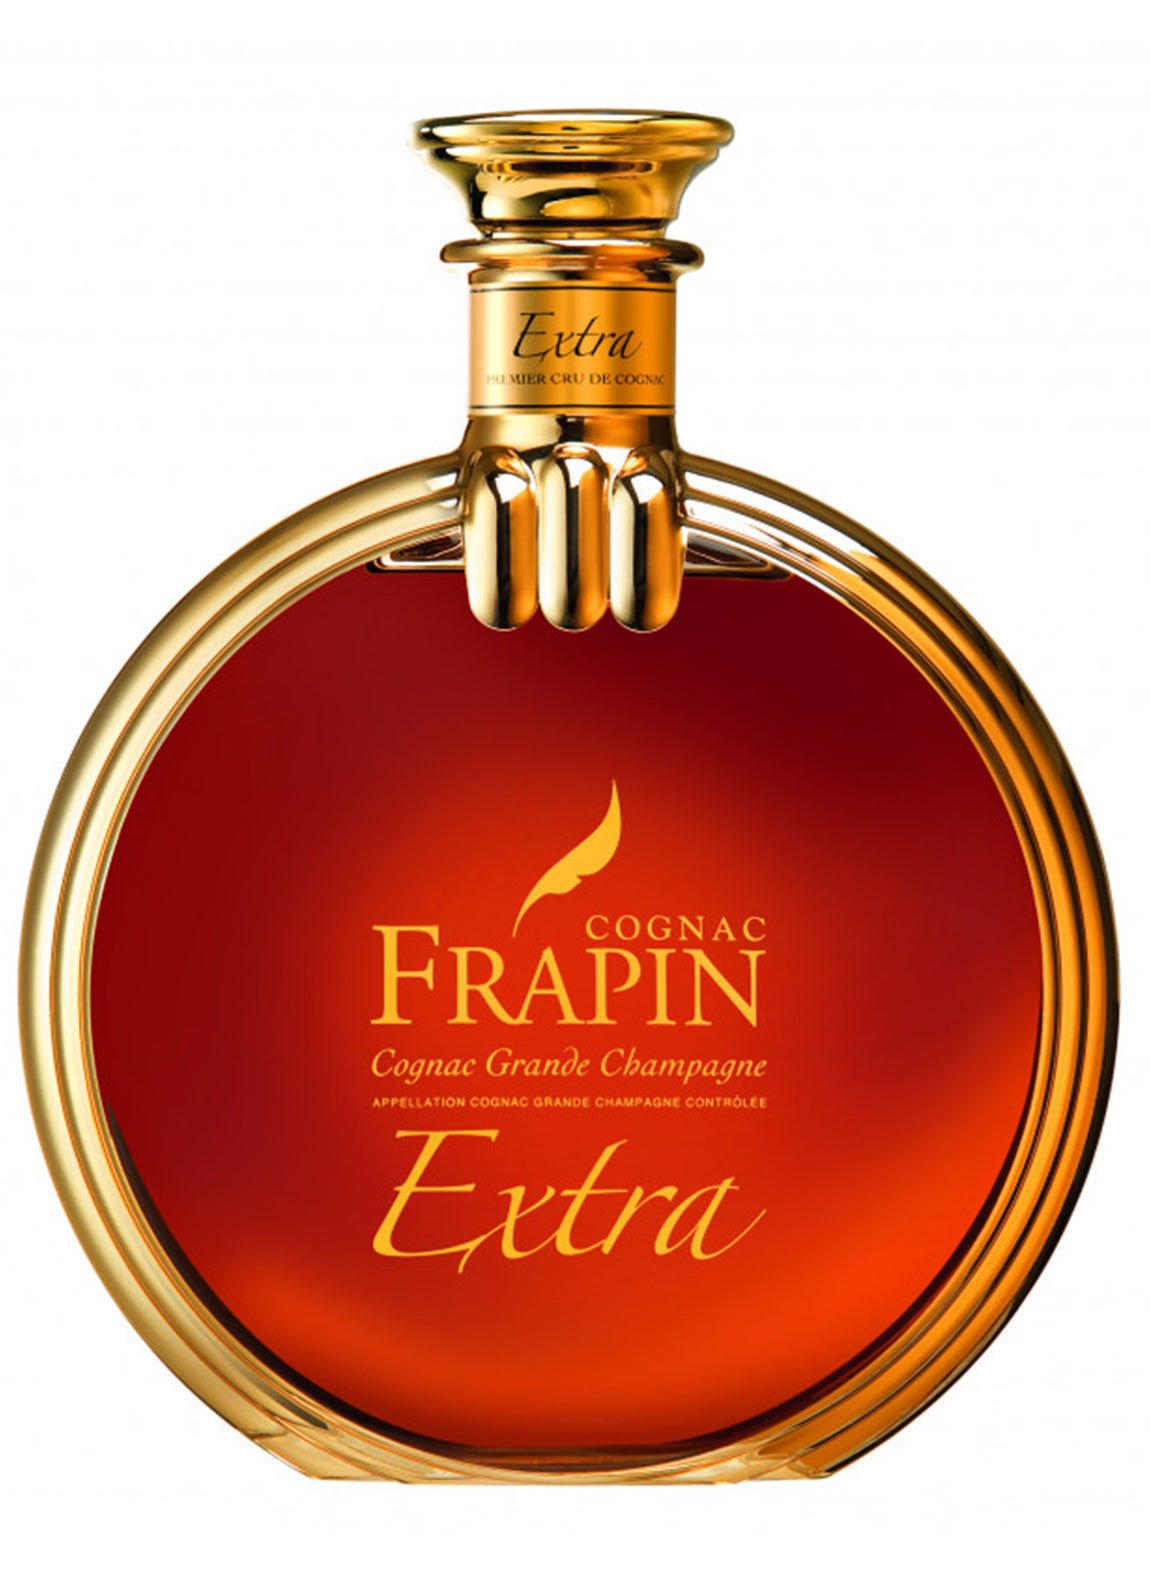 Frapin EXTRA Cognac 700ml - Cognac - Liquor Wine Cave